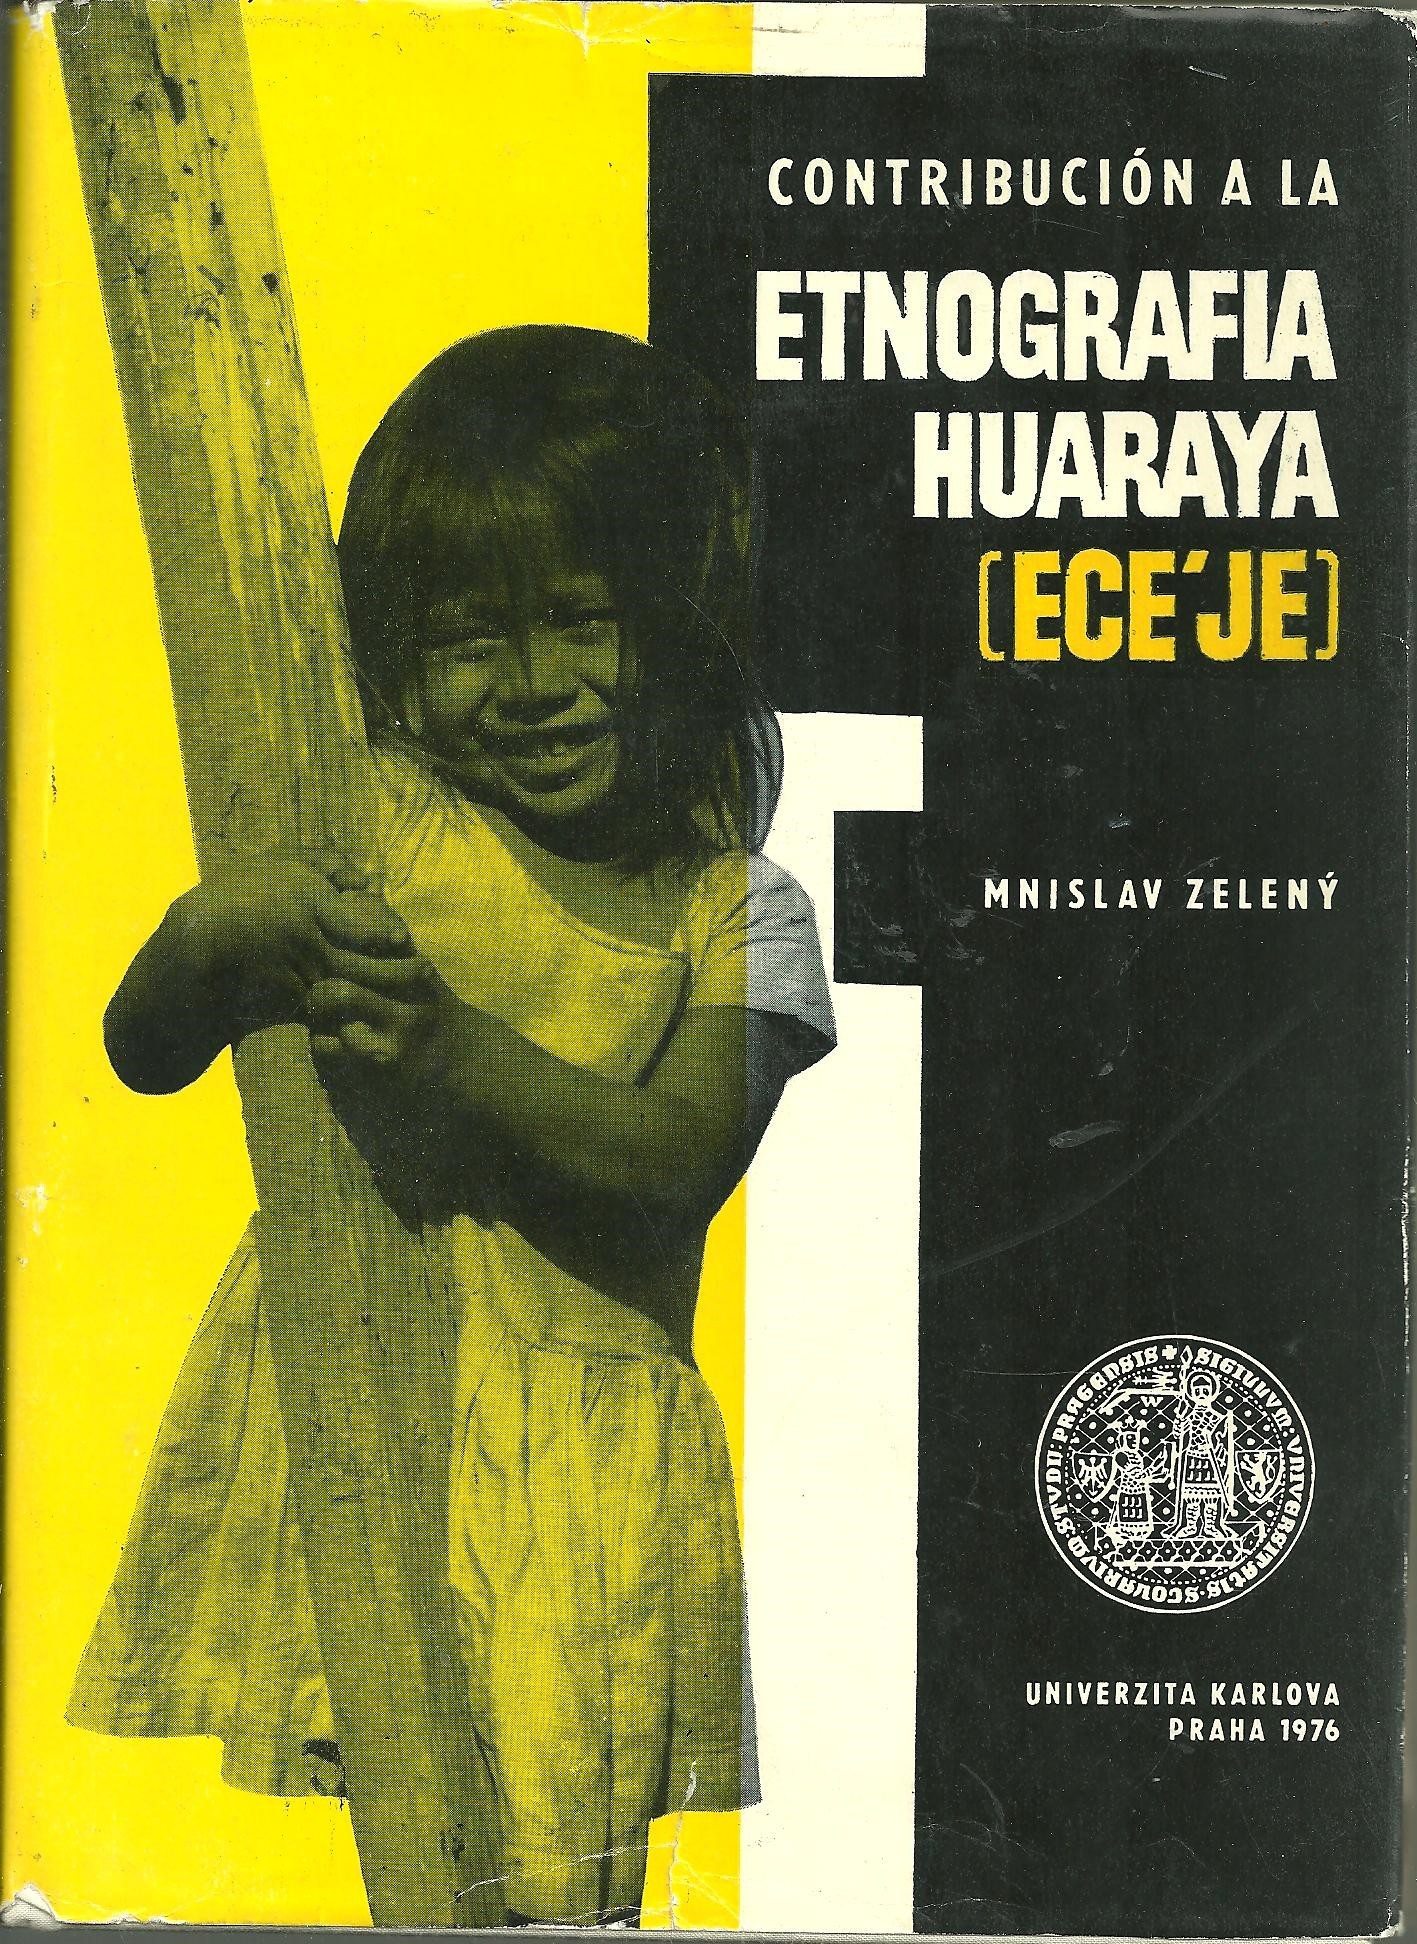 CONTRIBUCION A LA ETNOGRAFIA HUARAYA (ECE'JE).